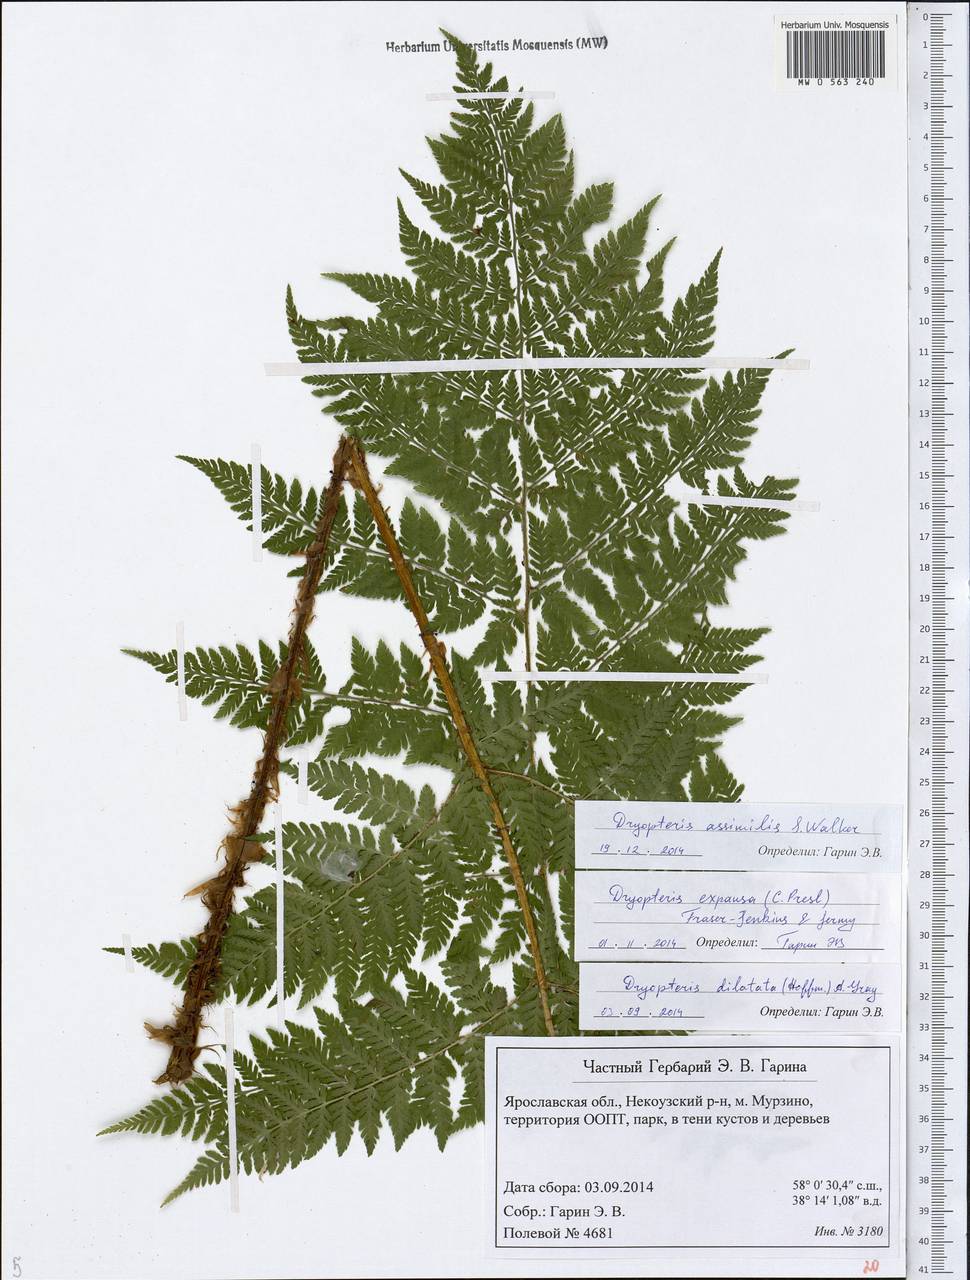 Dryopteris expansa (C. Presl) Fraser-Jenk. & Jermy, Eastern Europe, Central forest region (E5) (Russia)